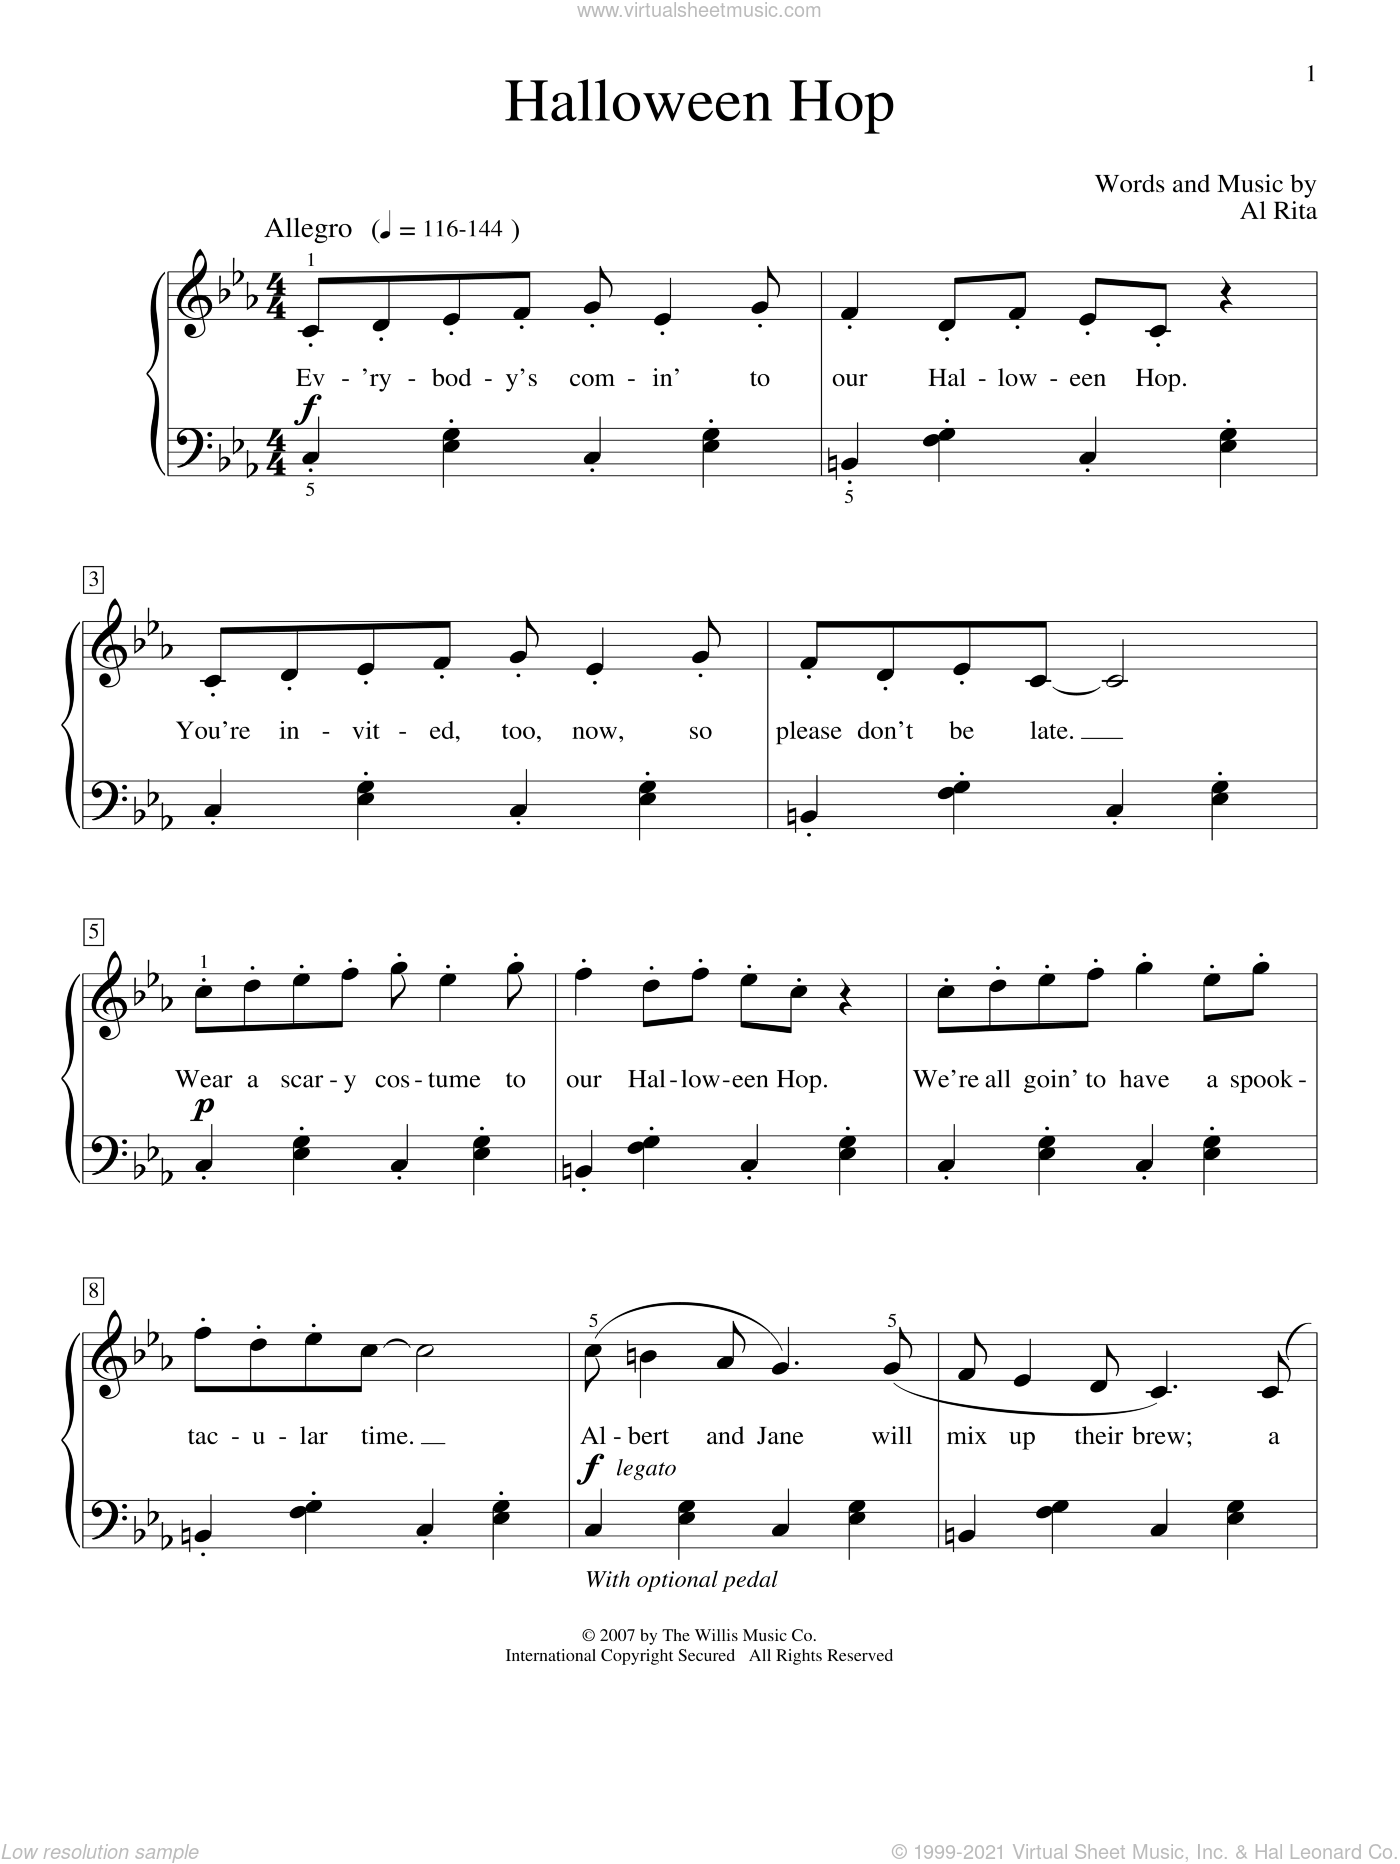 rita-halloween-hop-sheet-music-for-piano-solo-elementary